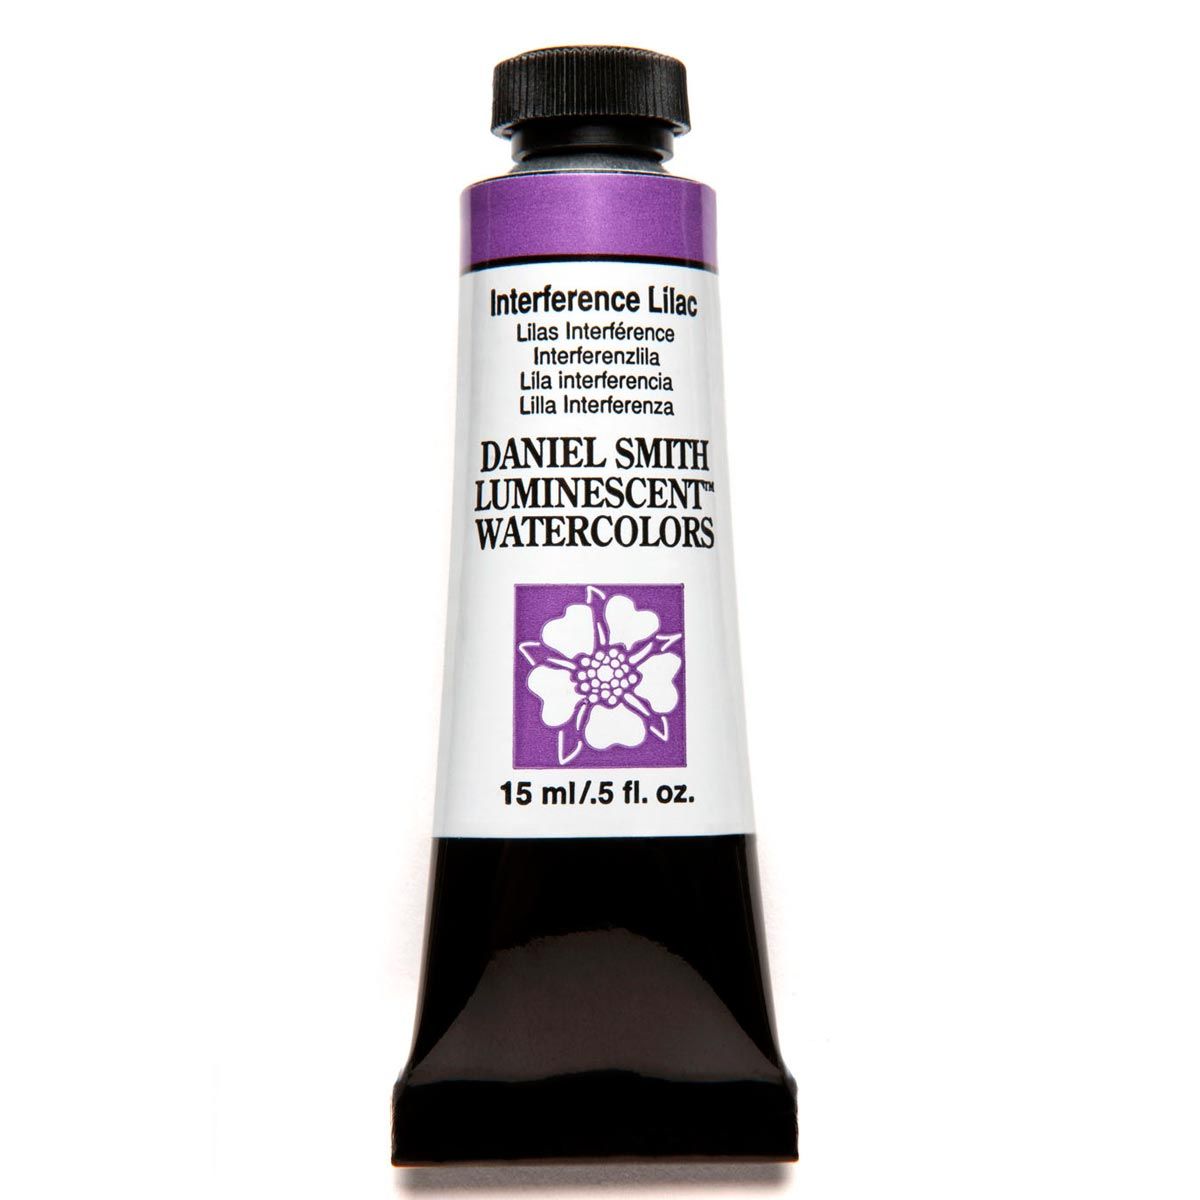 Daniel Smith Luminescent Watercolour Interference Lilac 15ml